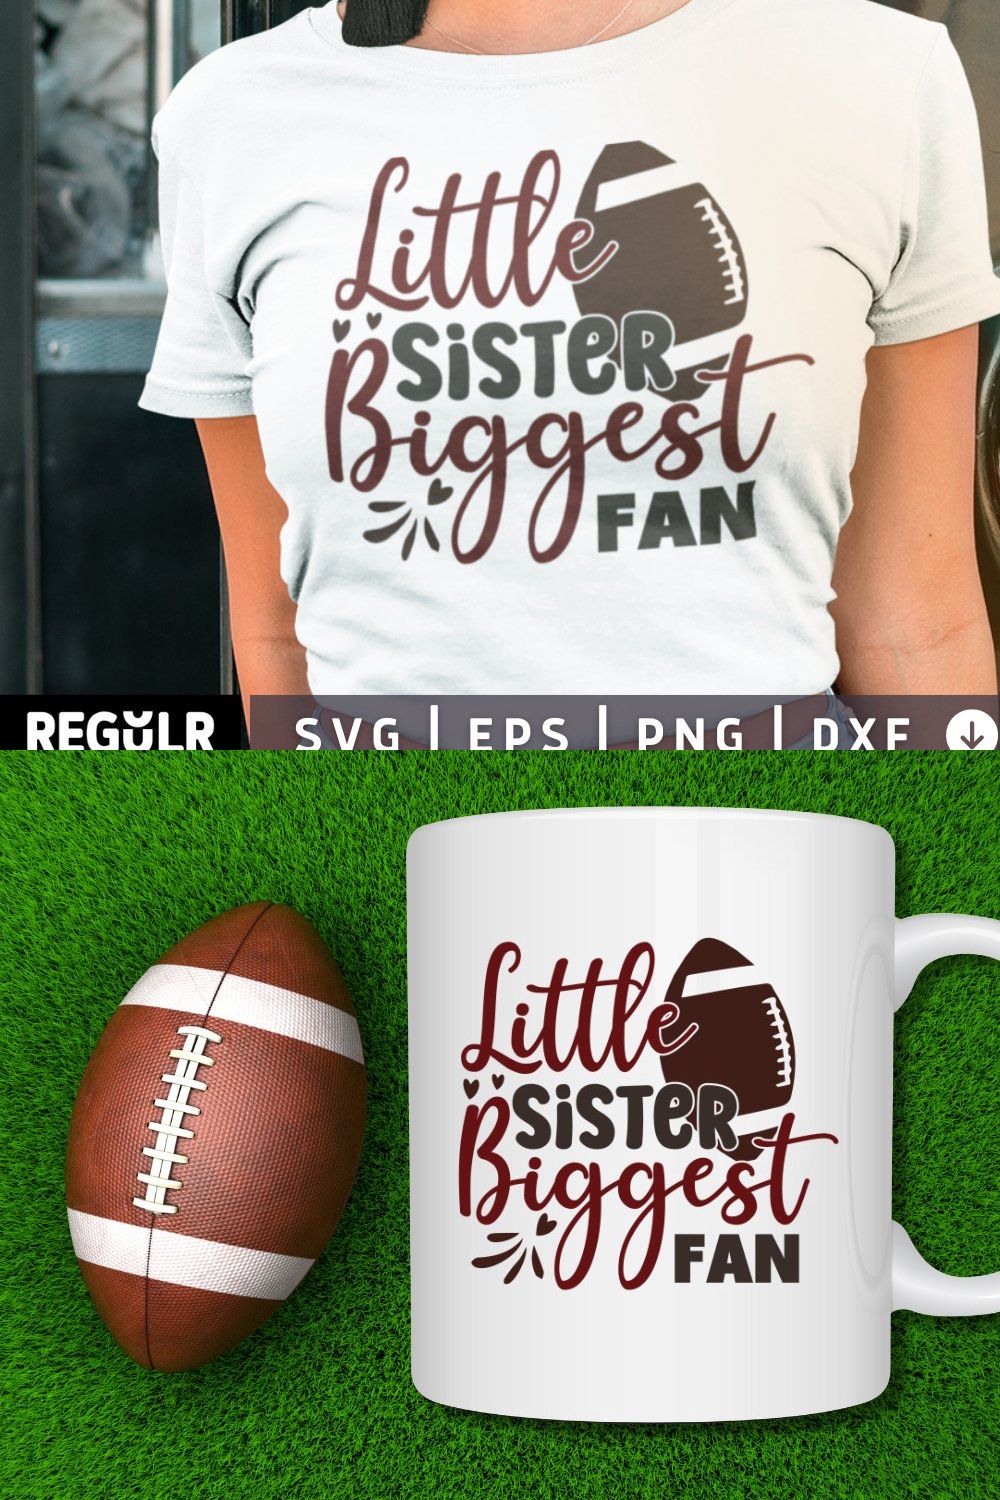 Little sister biggest fan SVG pinterest preview image.